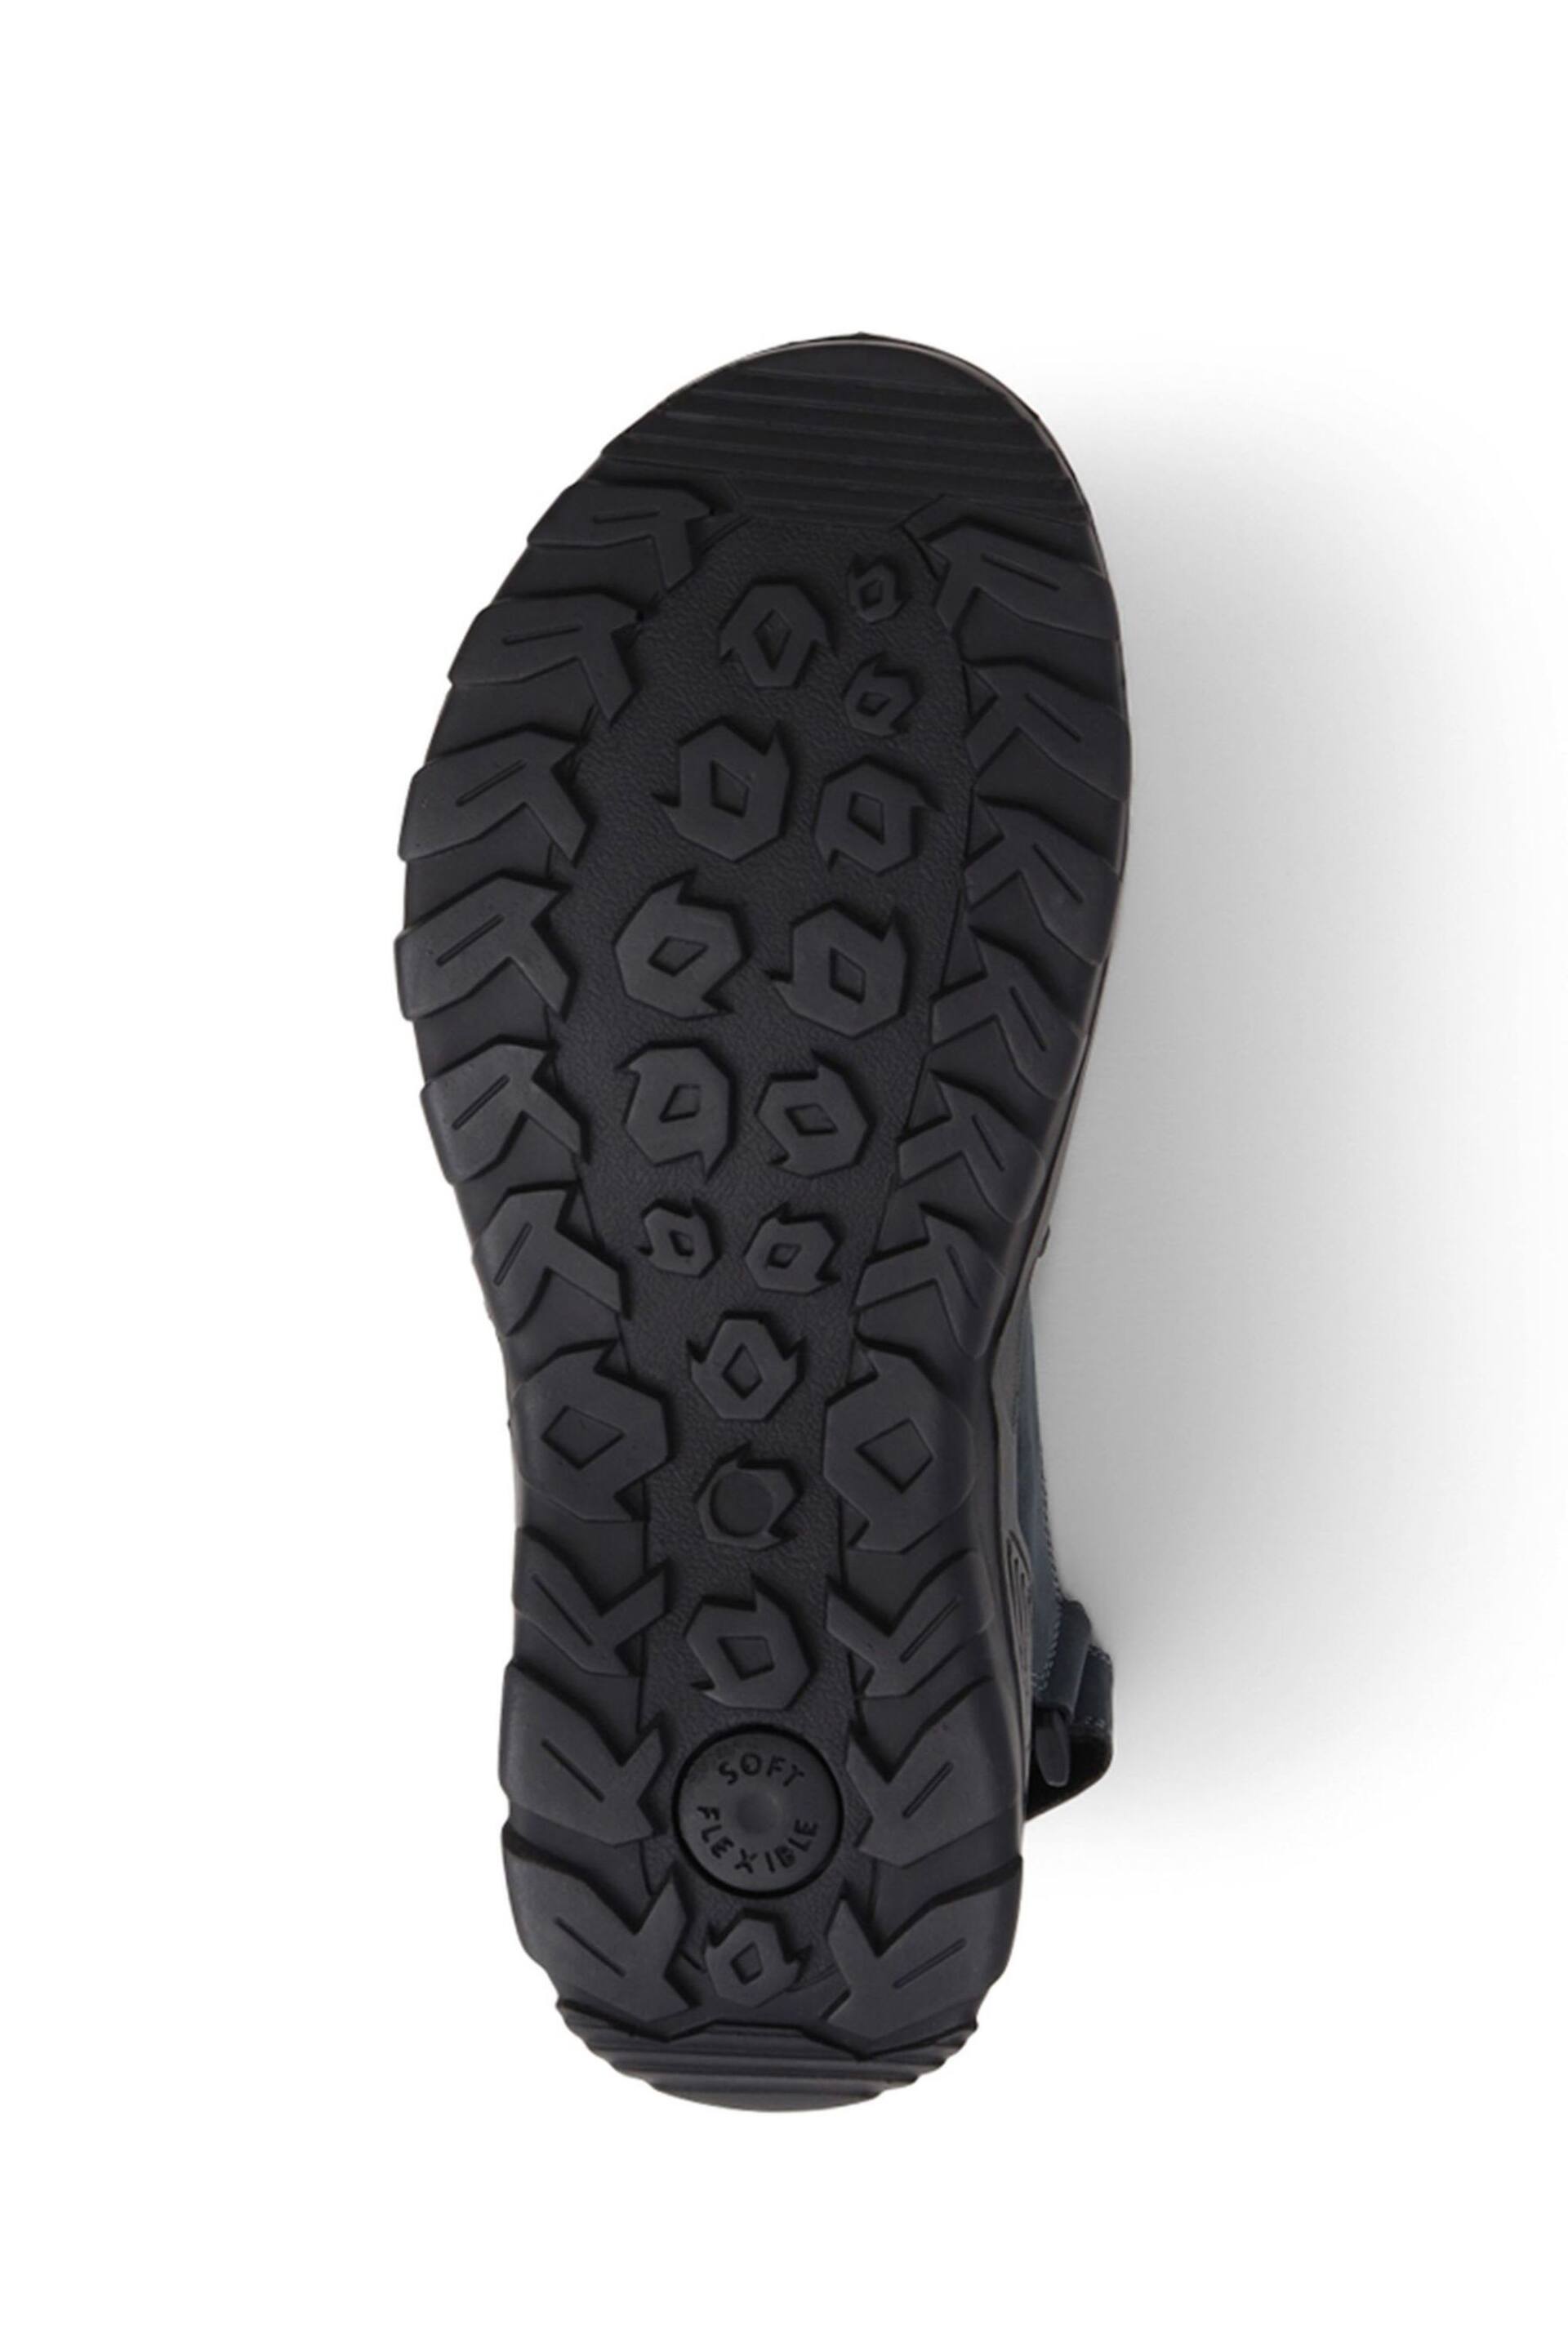 Pavers Adjustable Leather Walking Sandals - Image 5 of 5